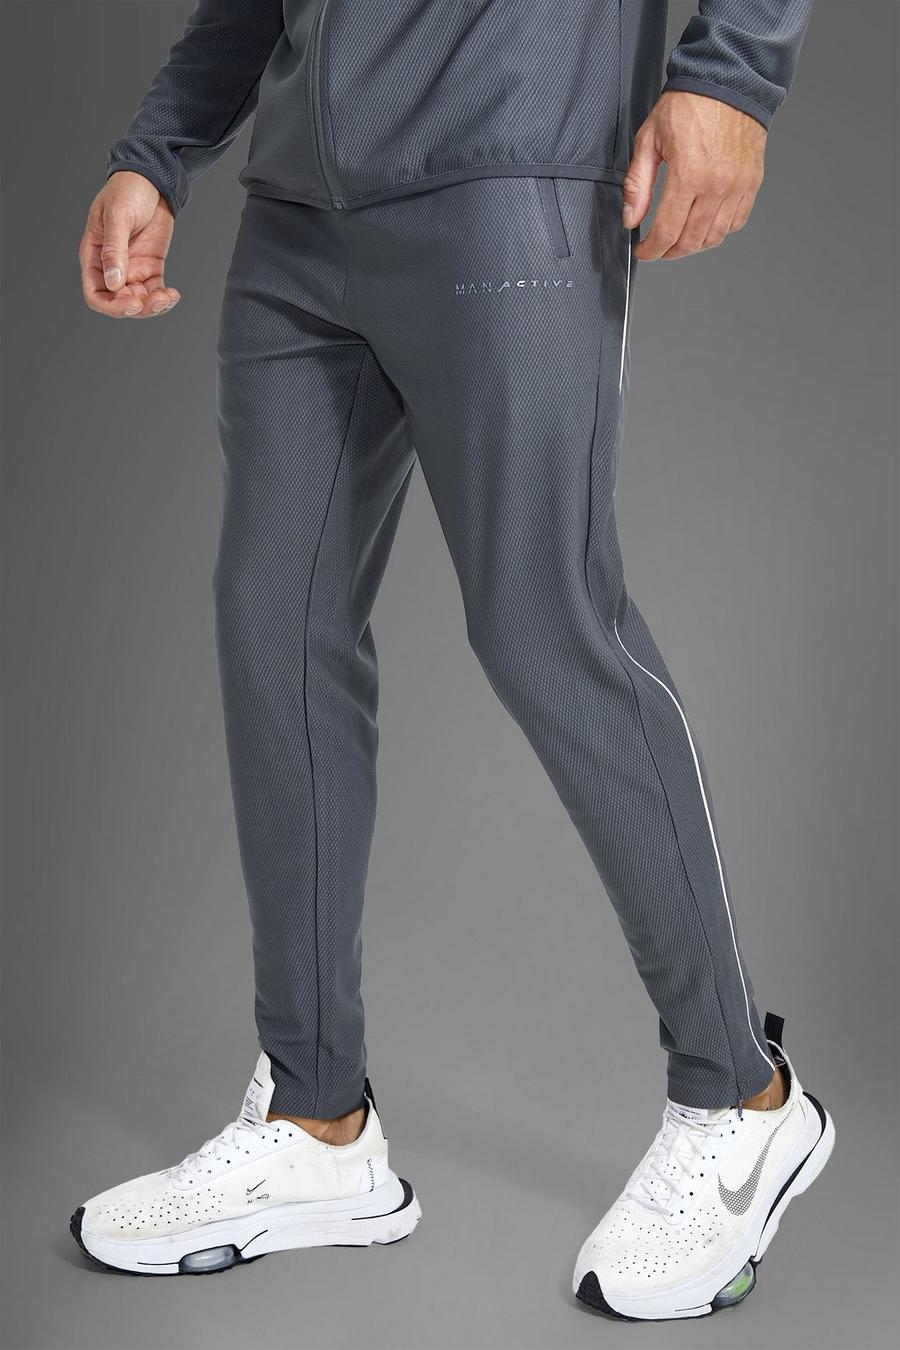 Man Active Gym Jogginghose mit reflekrierenden Pasplen, Grey